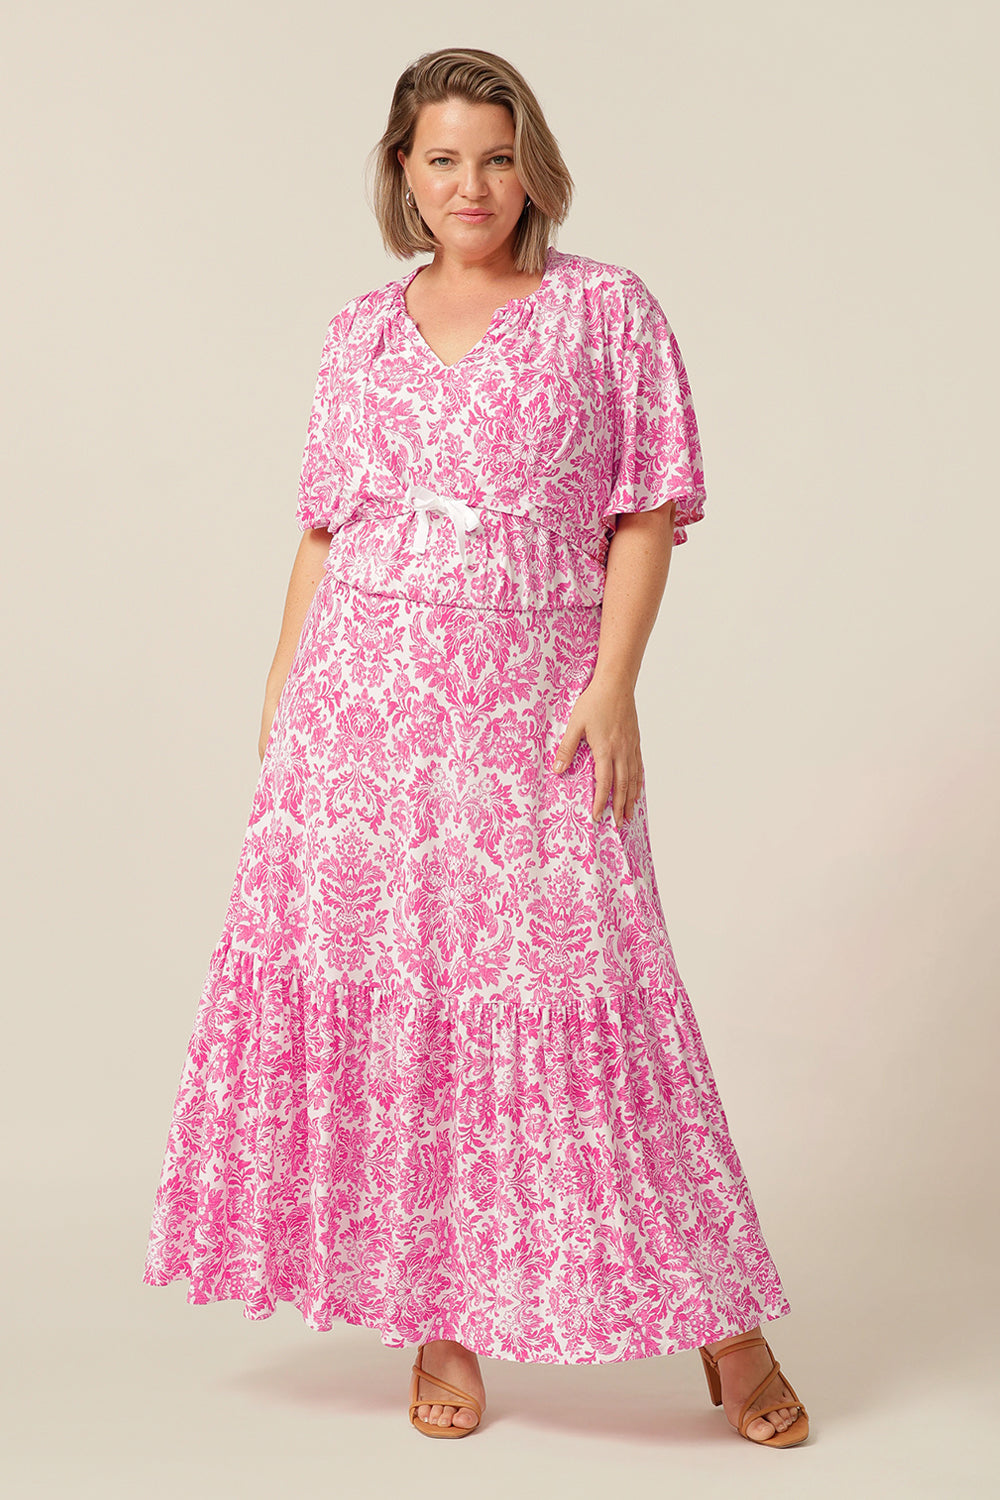 halter neck, jersey maxi dress with ruffle on hem - womens fashion pink and white maxi dress